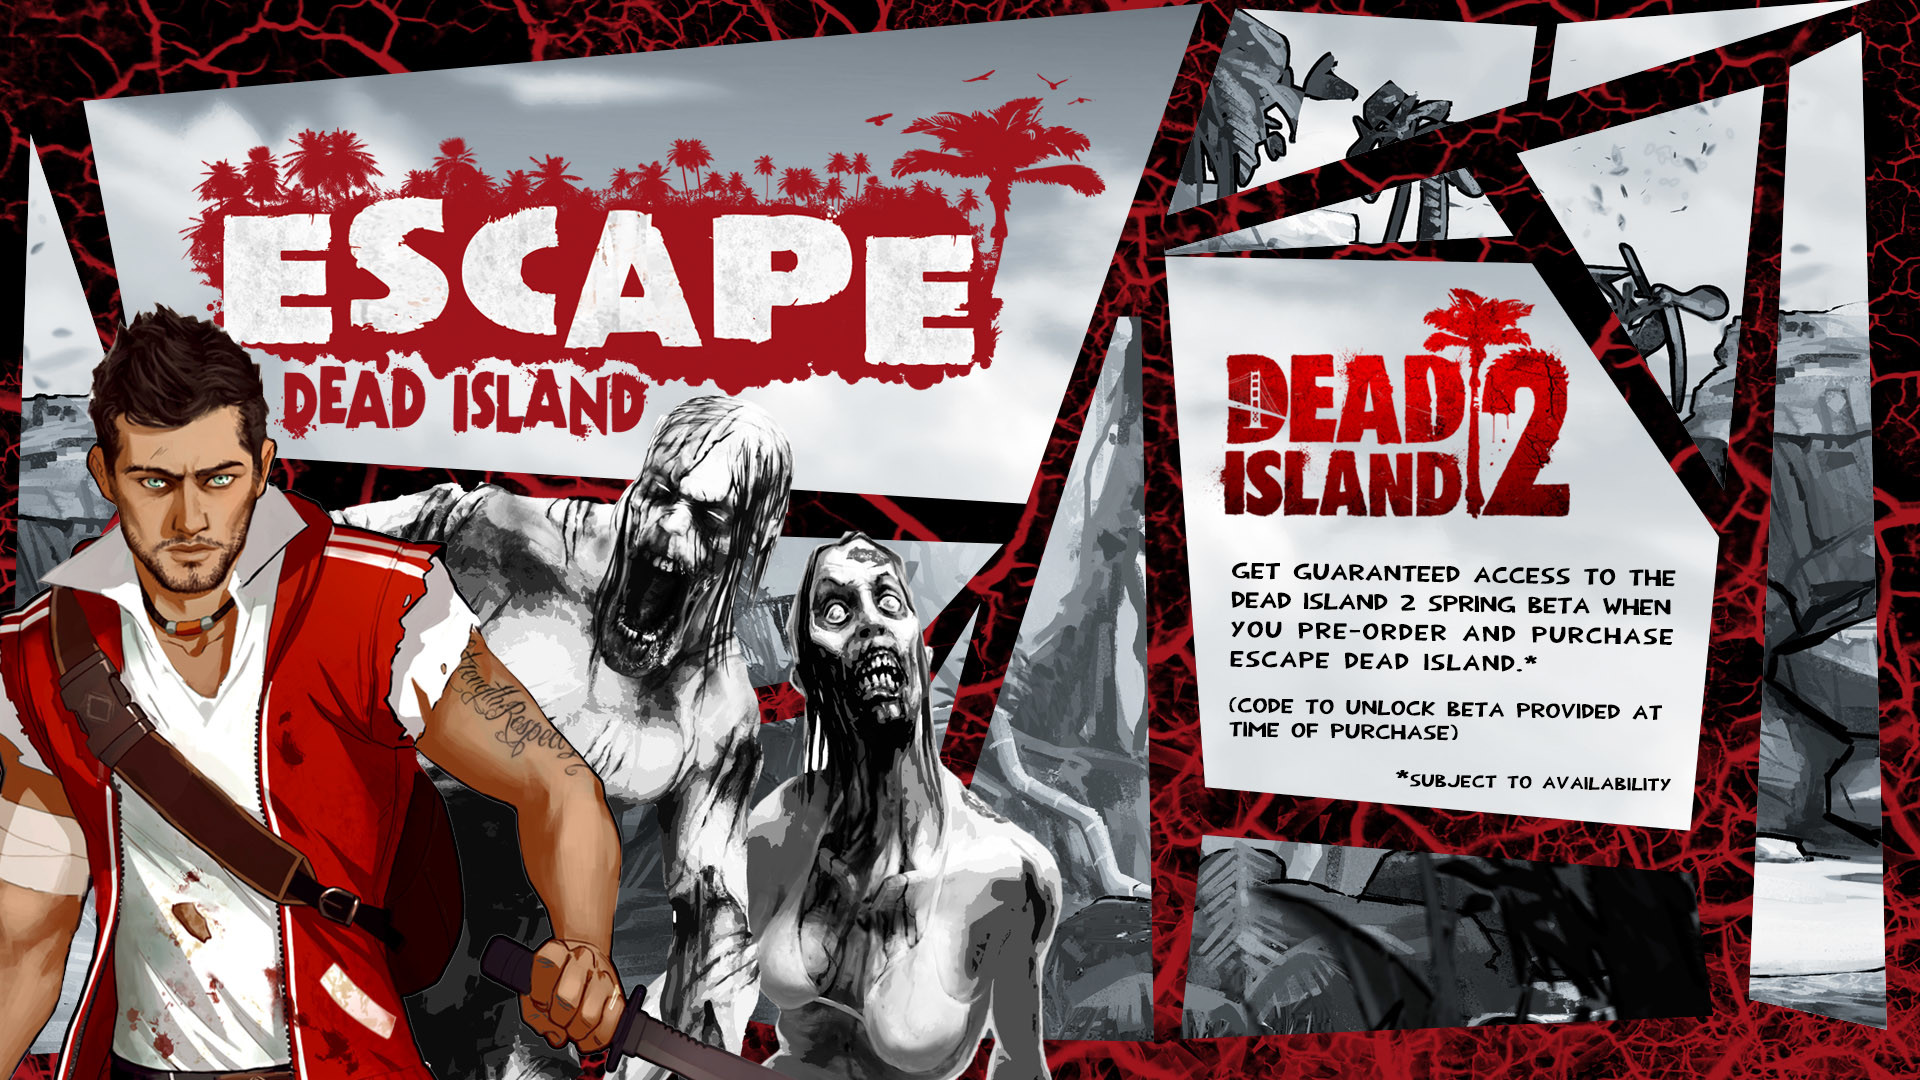 1920x1080 Escape Dead Island Images - GameSpot Dead Island 2 Wallpapers ...